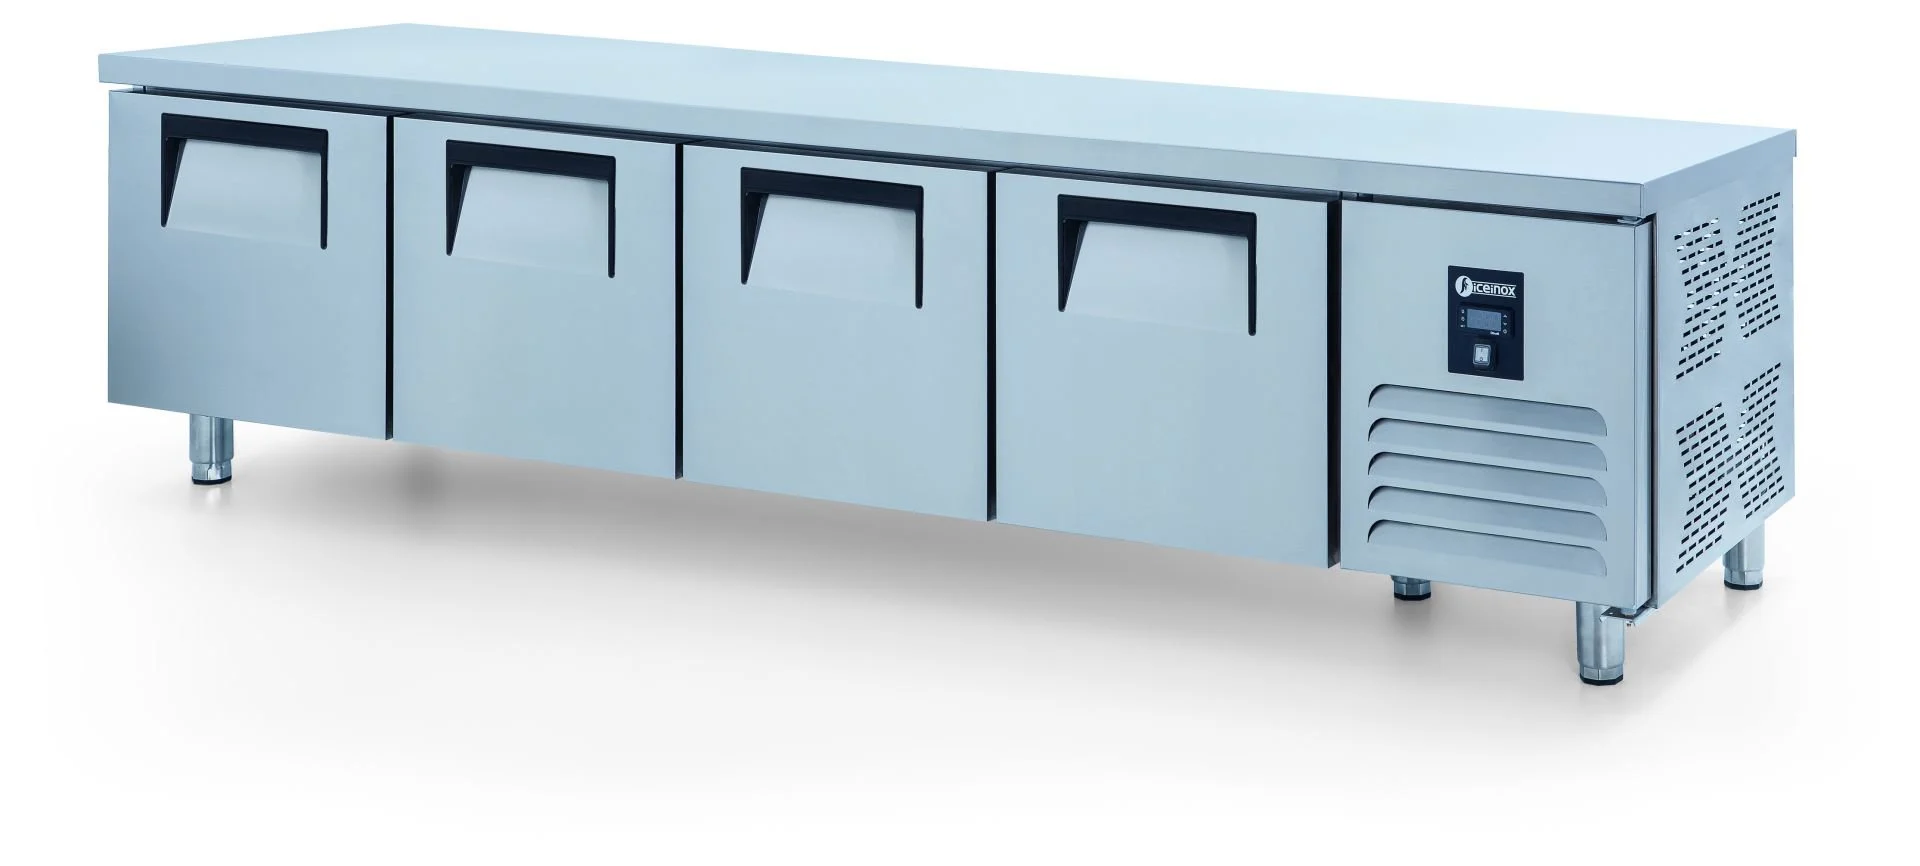 Iceinox UTS 450 CR Pişirici Altı Buzdolabı, 4 Kapılı, 450 L